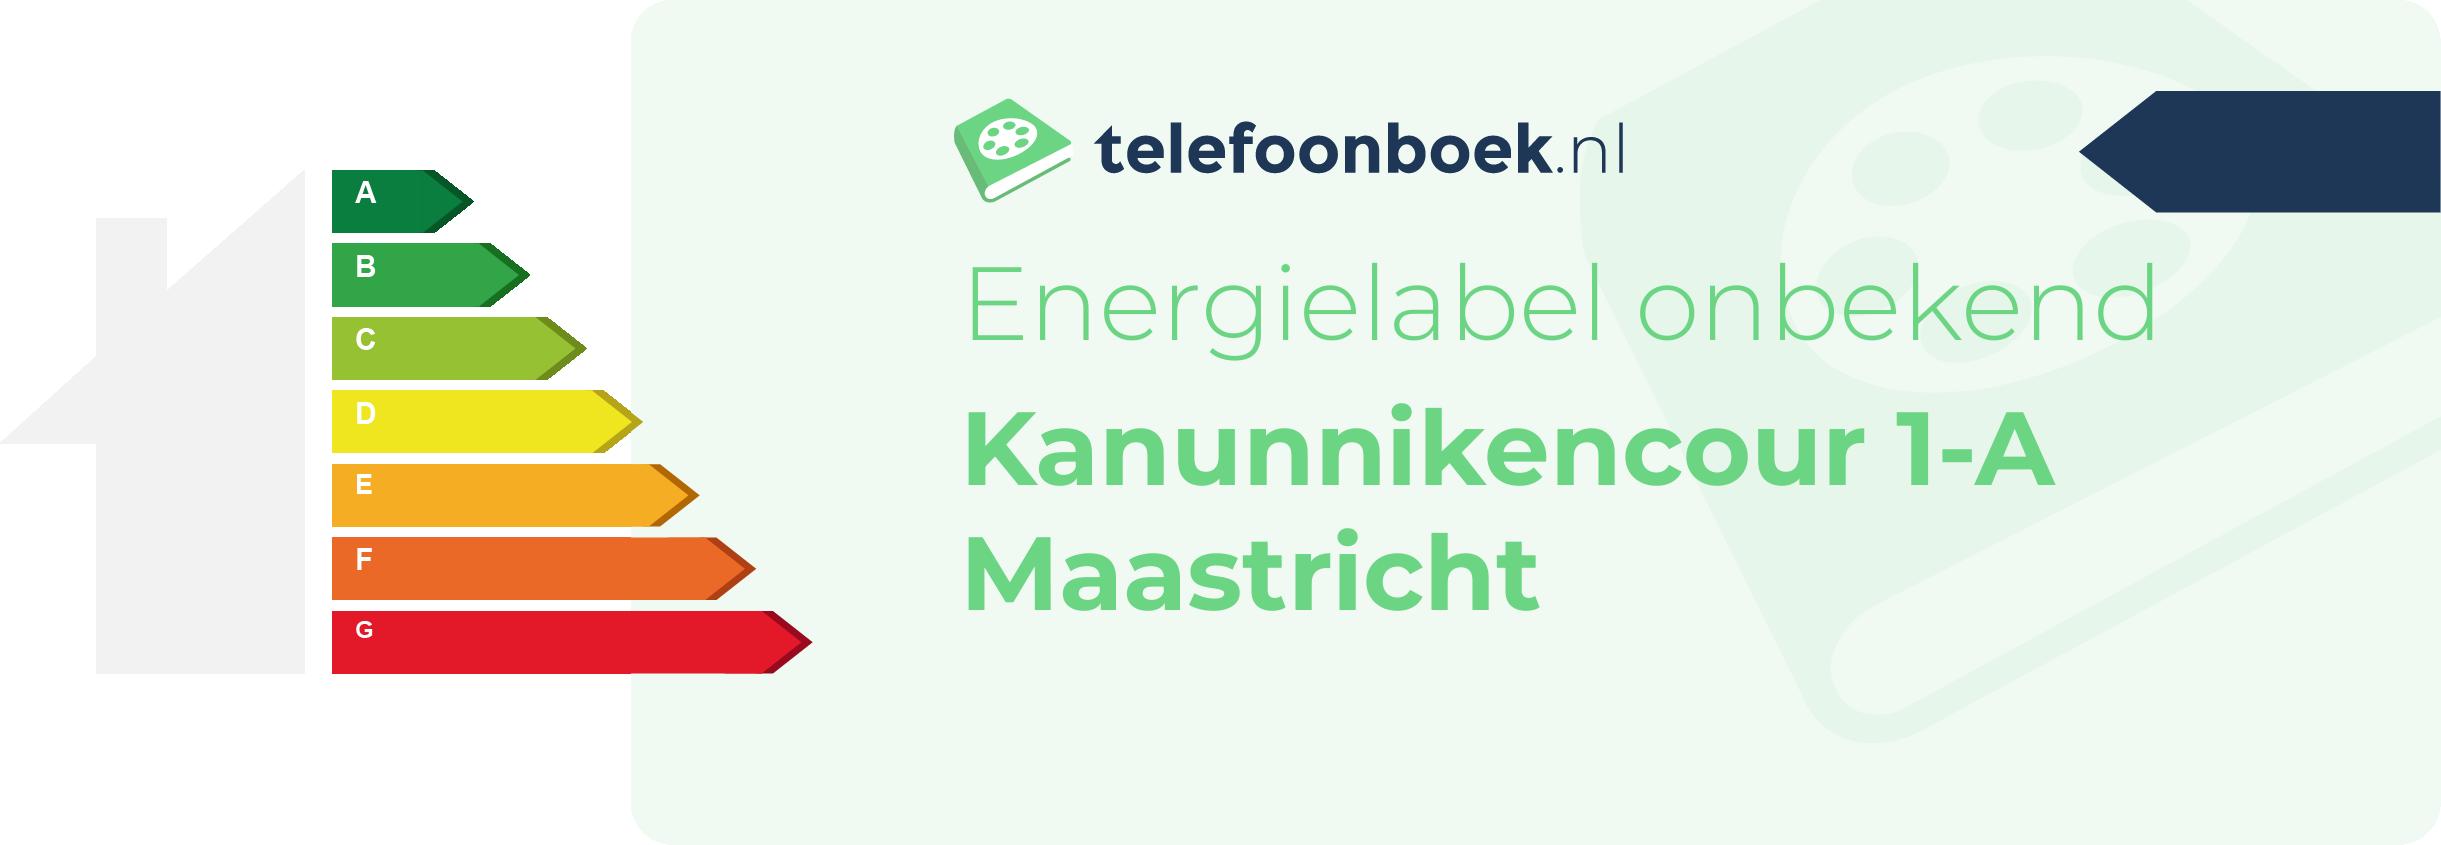 Energielabel Kanunnikencour 1-A Maastricht